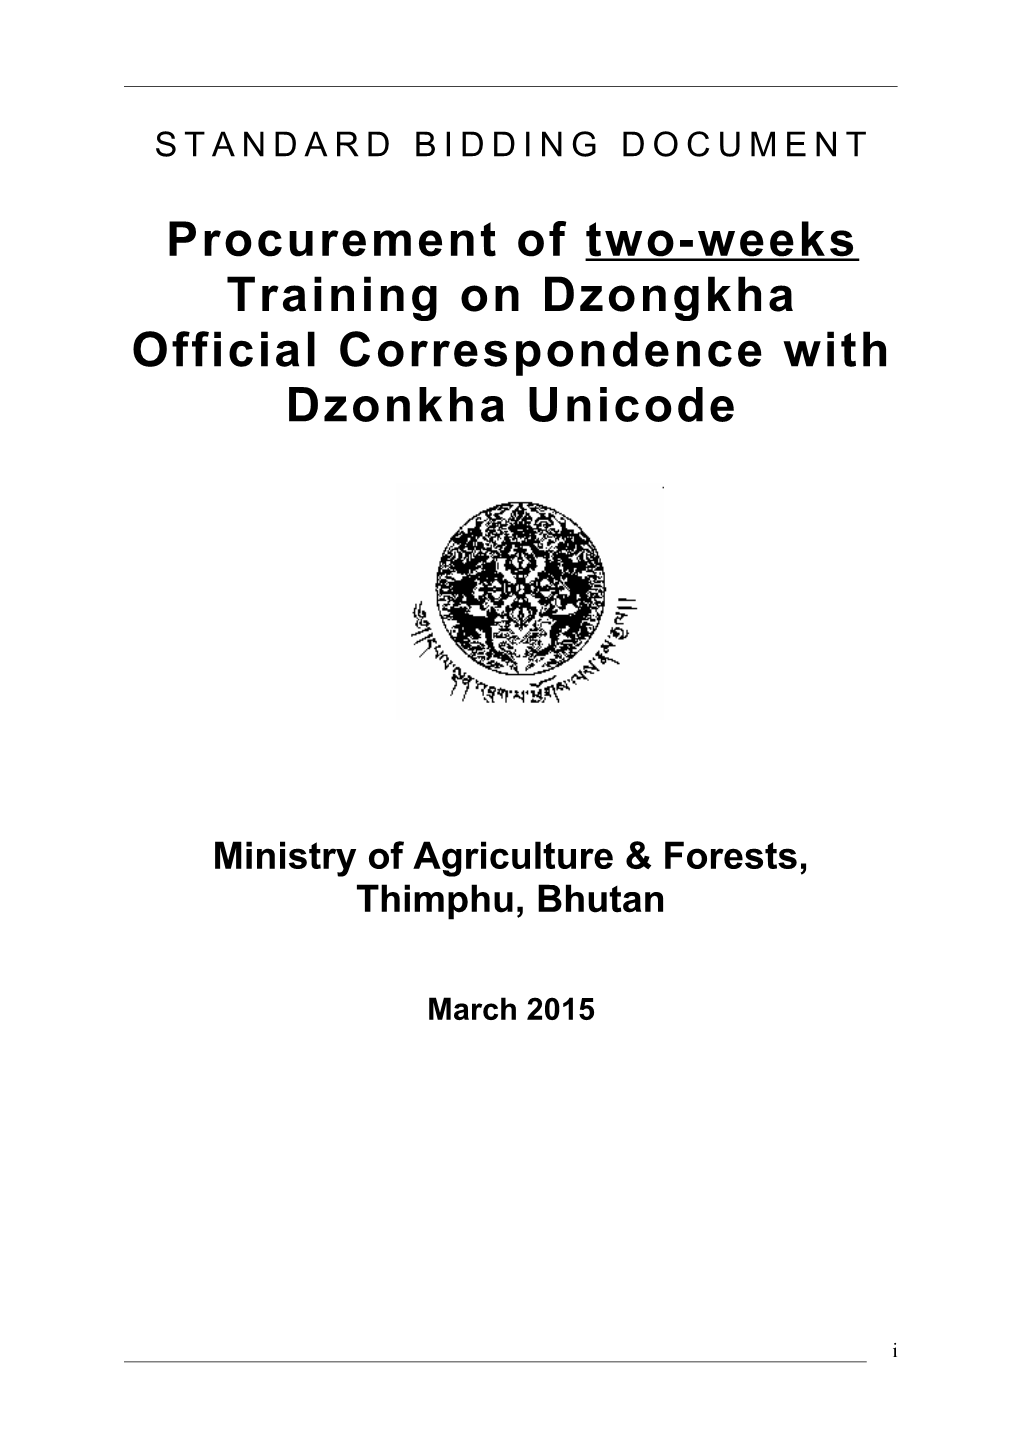 Procurement of Two-Weeks Training on Dzongkha Official Correspondence with Dzonkha Unicode